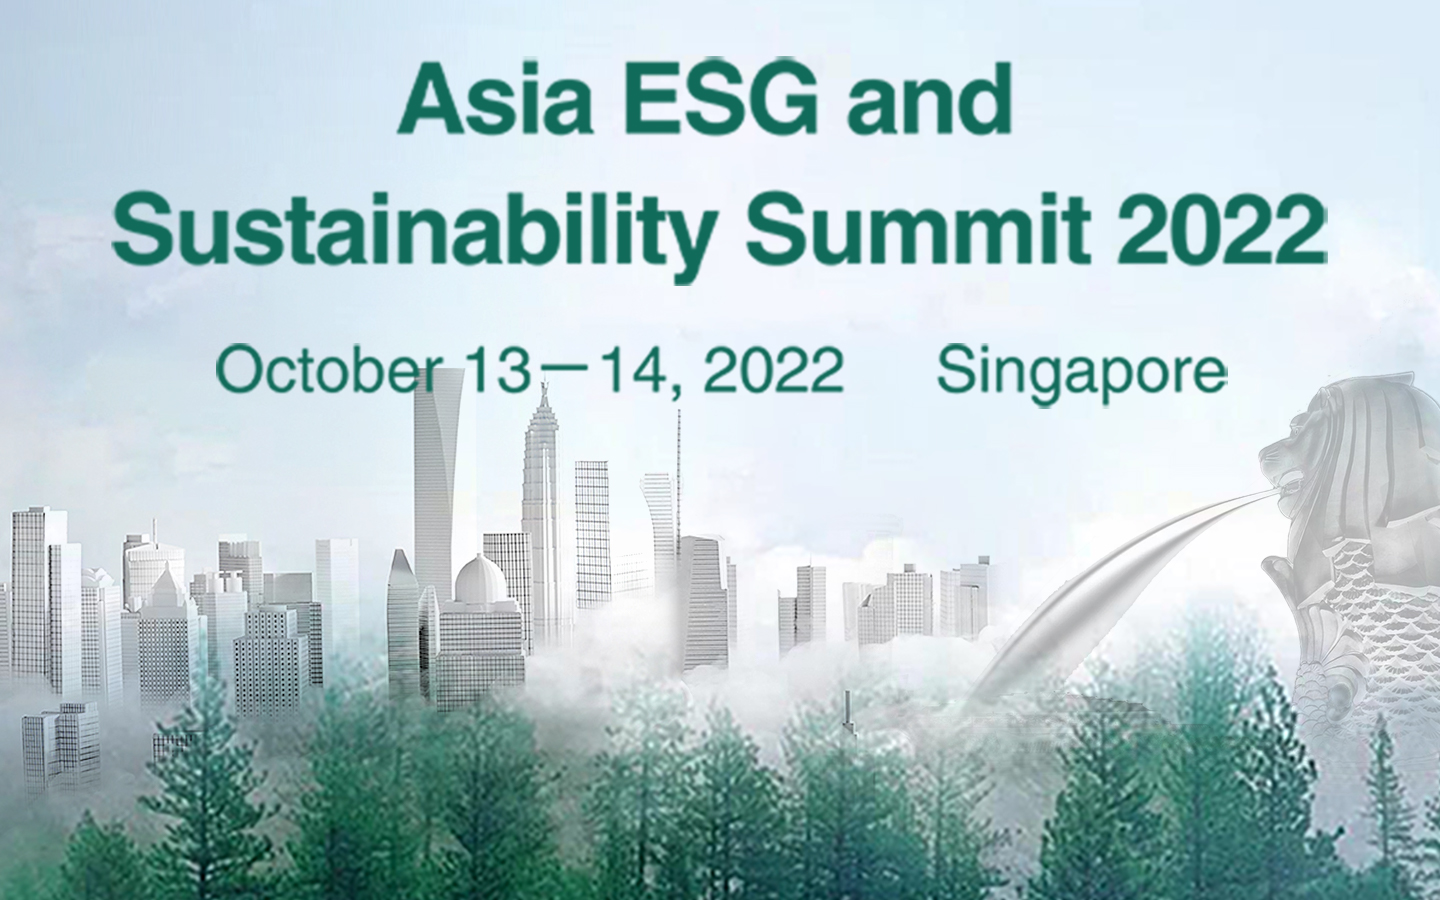 Asia ESG and Sustainability Summit 2022